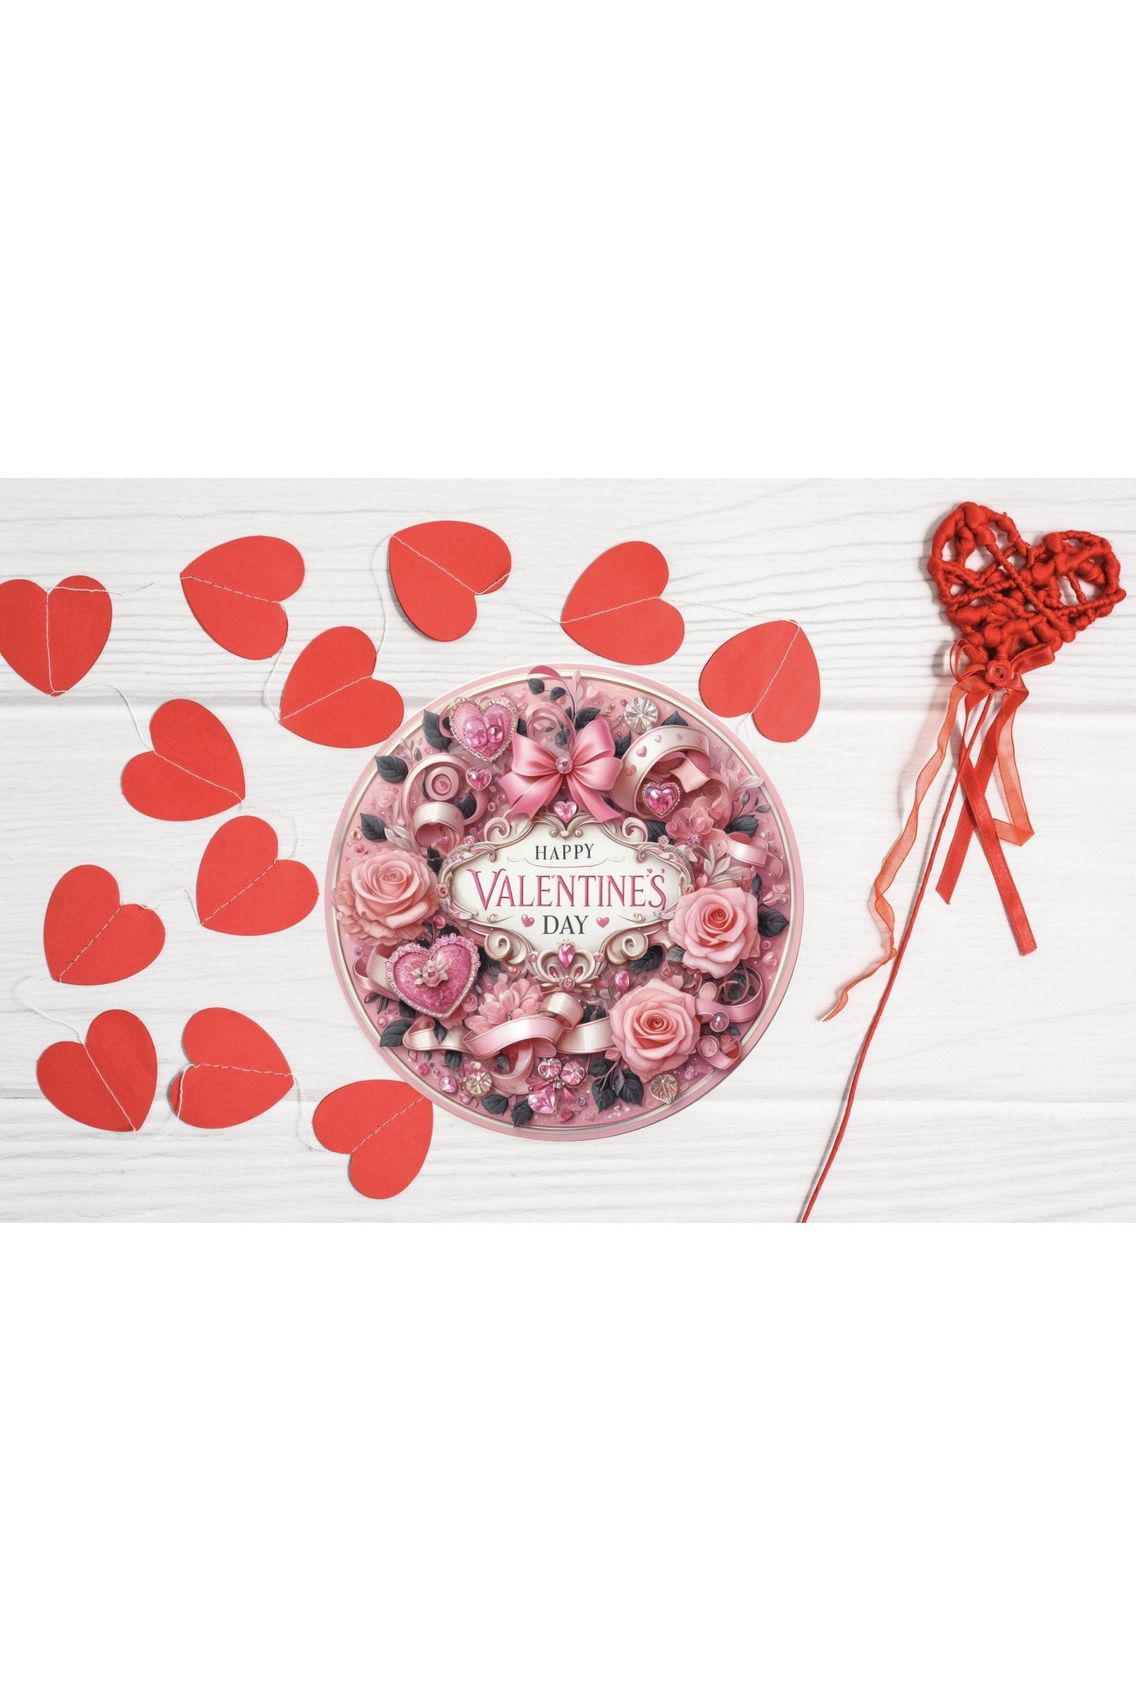 Shop For Victorian Valentine's Day Pink Sign - Wreath Enhancement